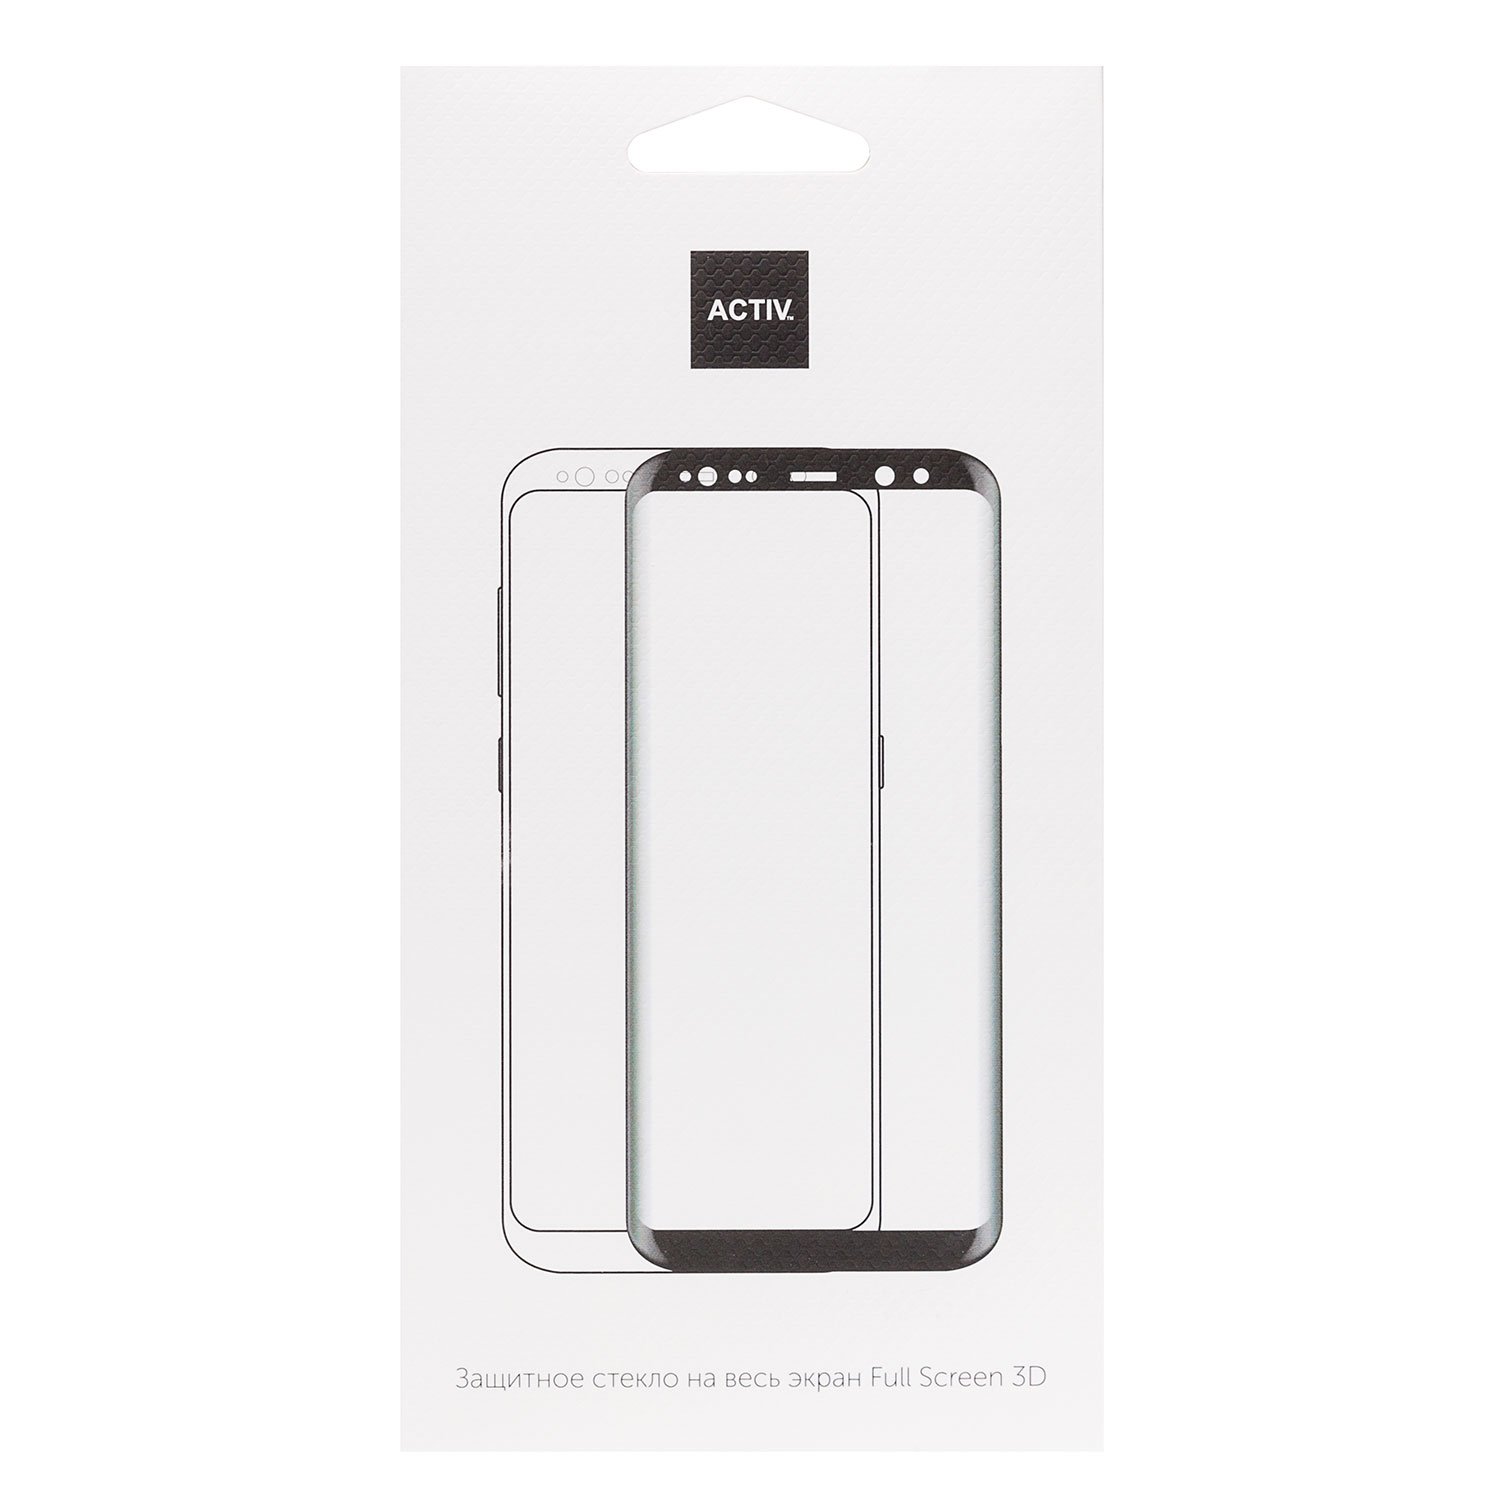 Защитное стекло Activ Clean Line для экрана смартфона Oppo Realme C15, Full screen, ударопрочное, поверхность глянцевая, черная рамка, 3D (203146)